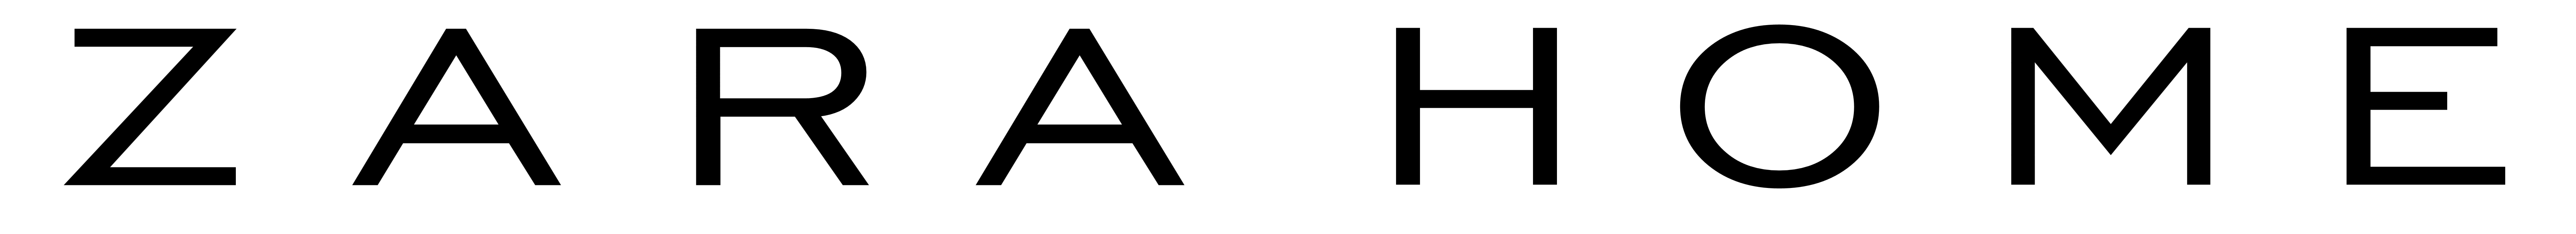 Zara Home logo, logotype